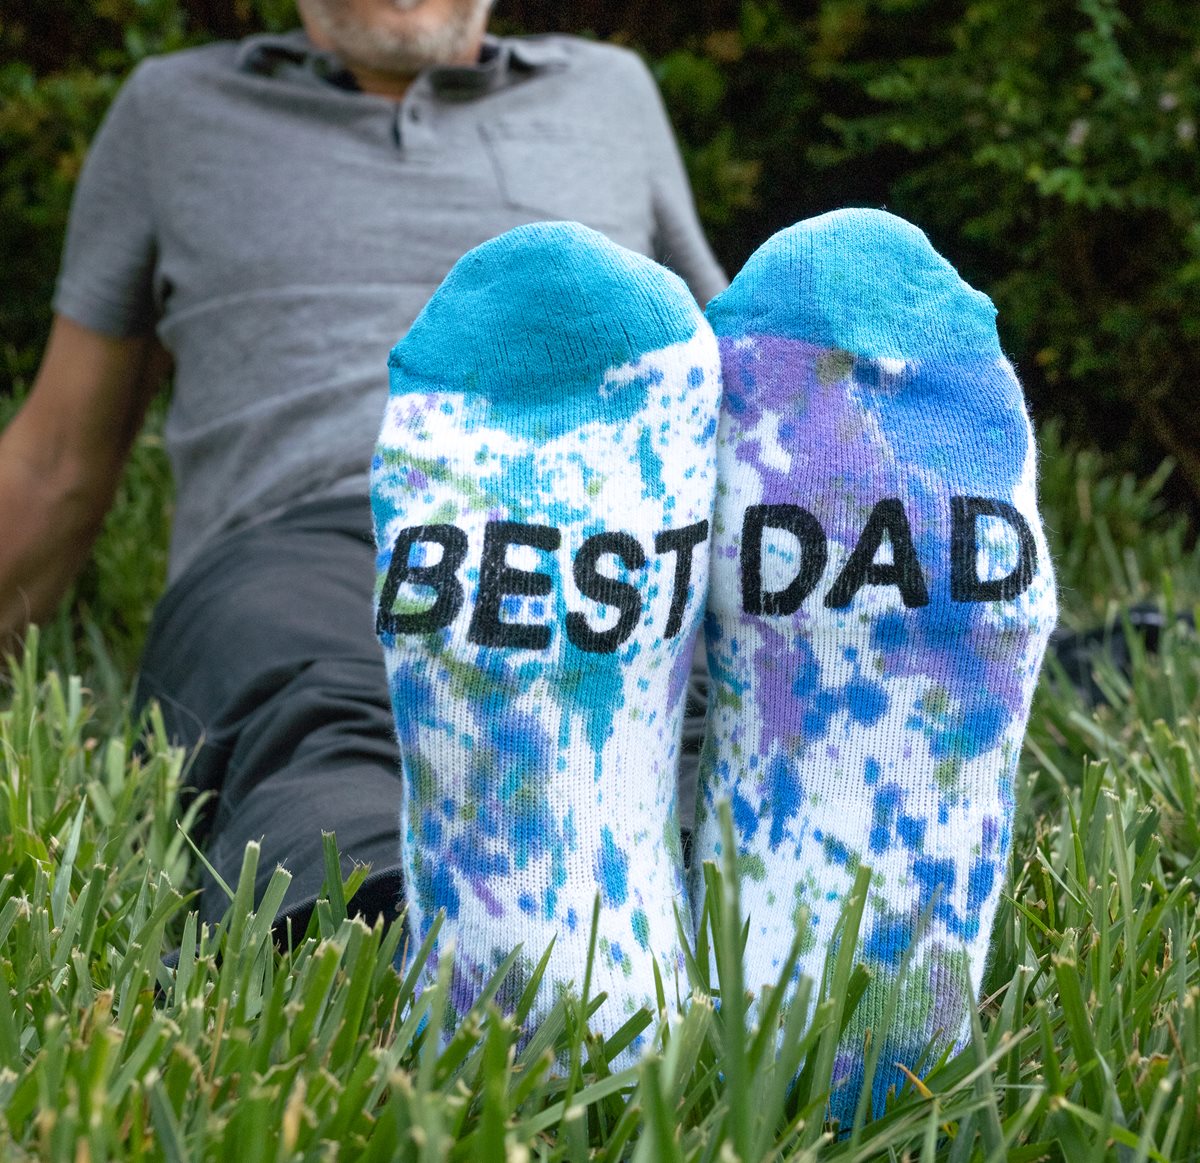 Father's Day - Best Dad Splatter Socks